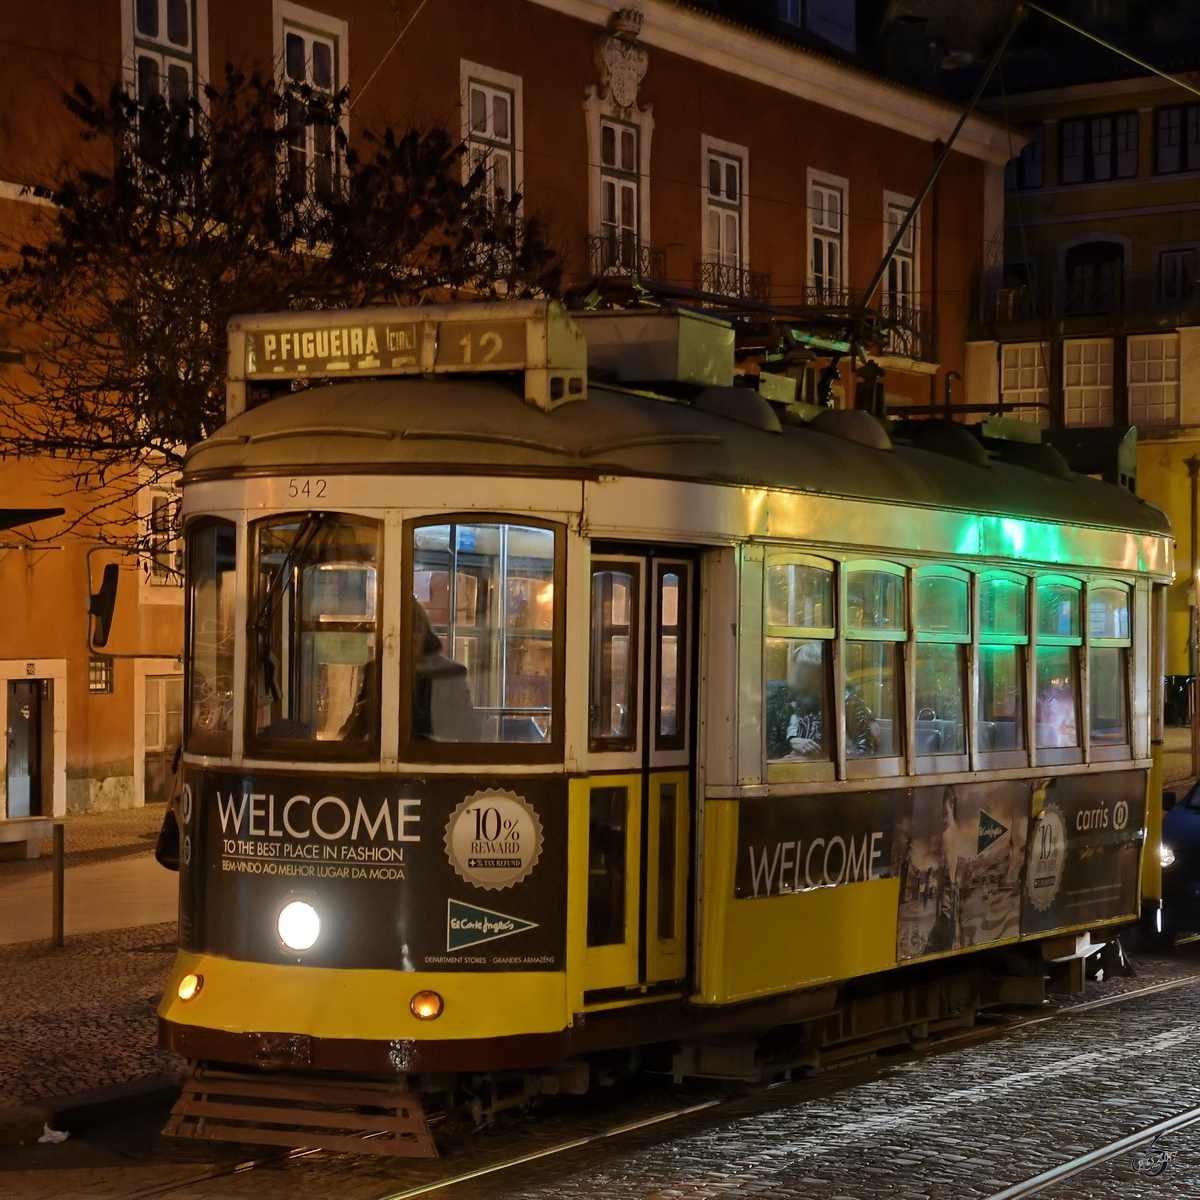 
Ein Remodelado Ende Januar 2017 in Lissabon.